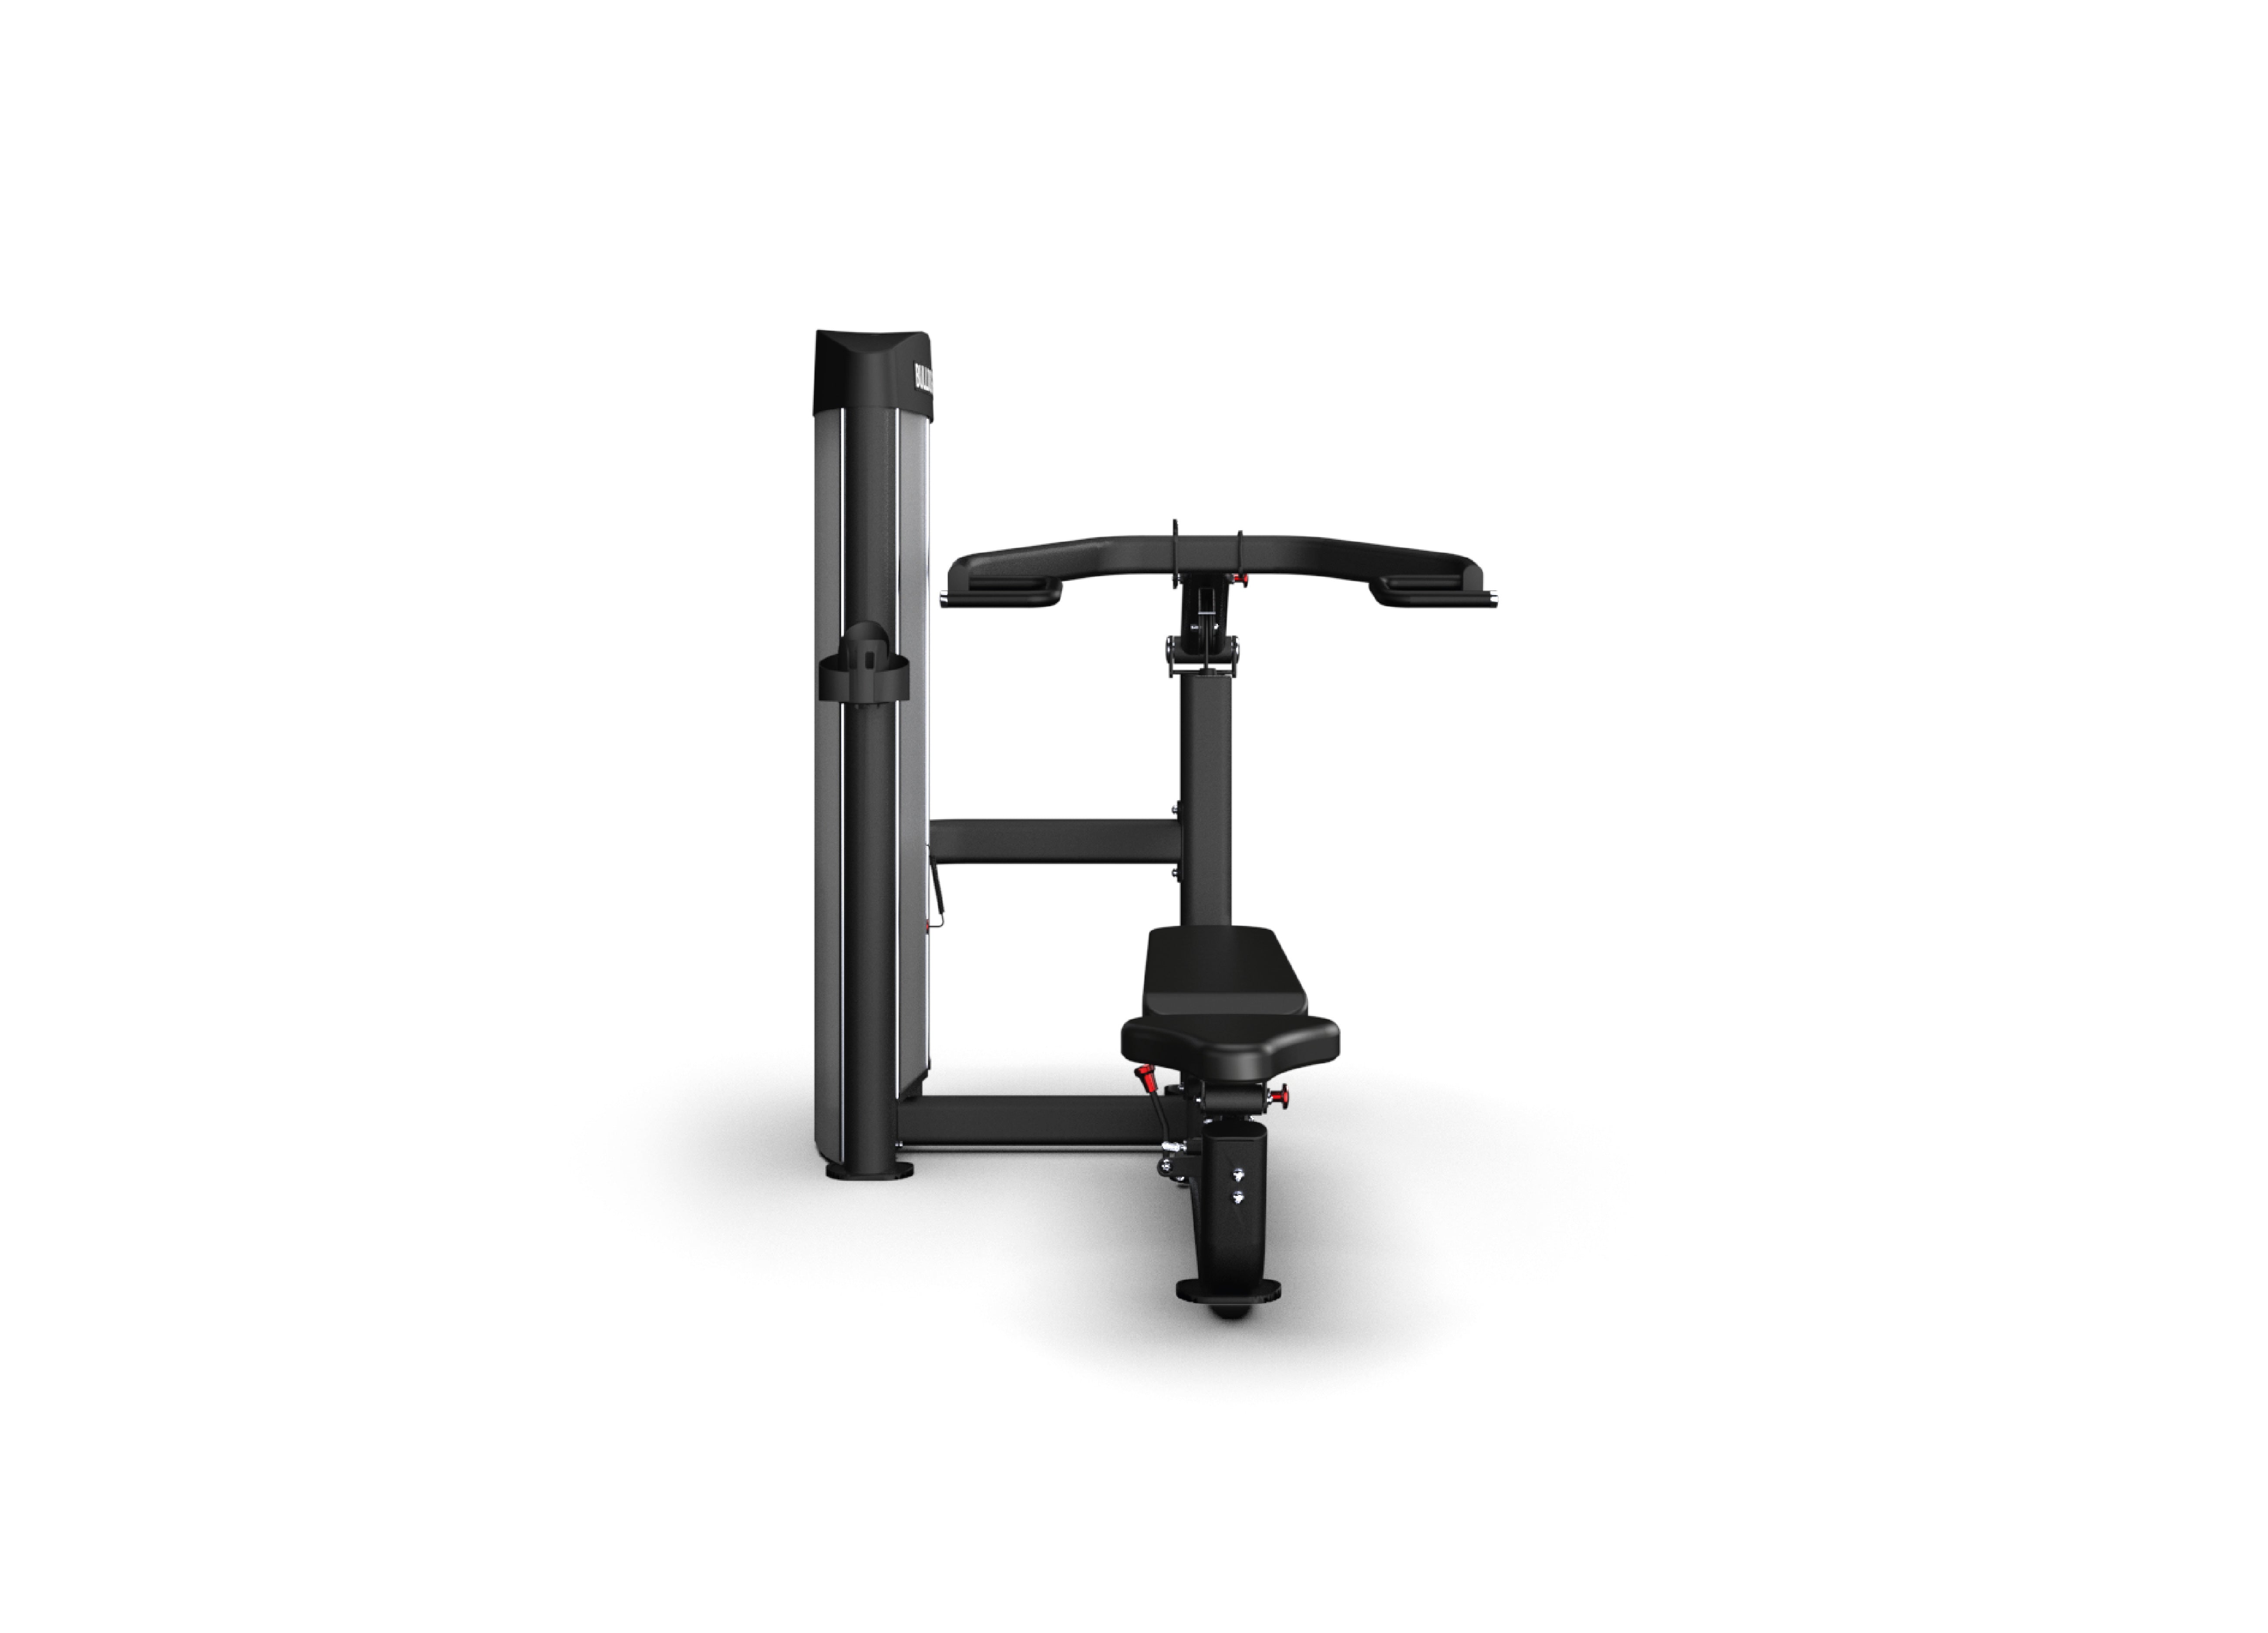 Bulldog Gear - Dual Function Seated Shoulder Press/ Chest Press Machine 100kg Stack